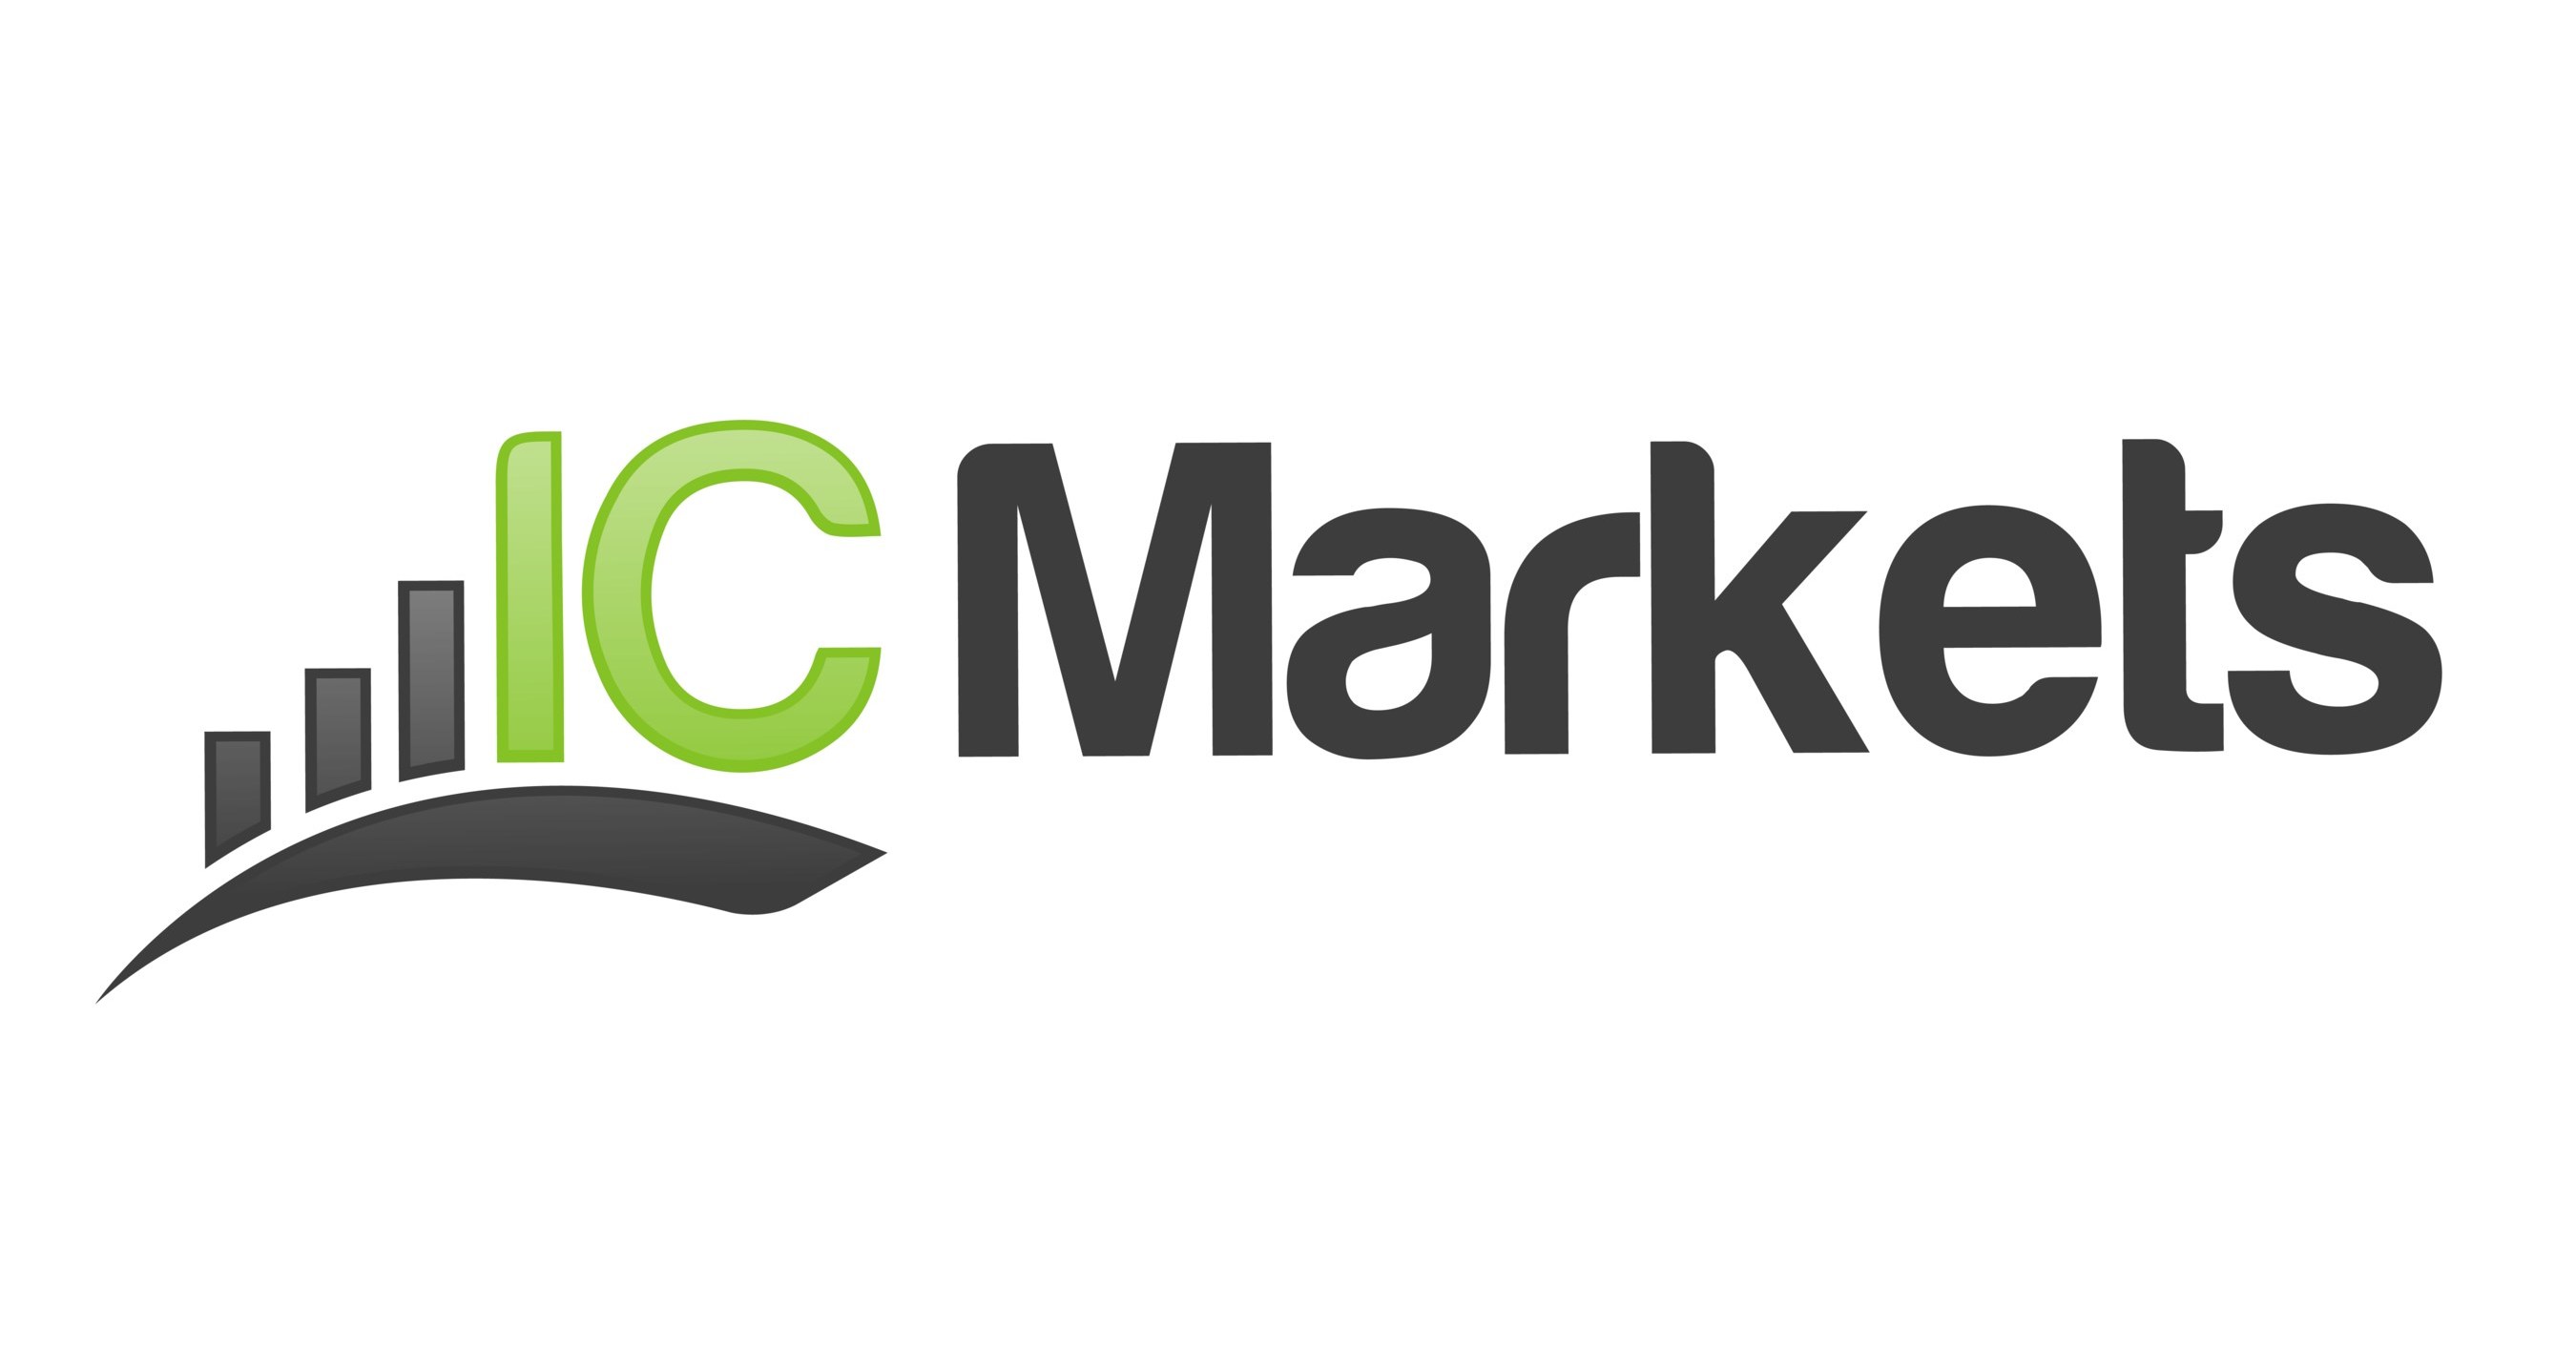 Icmarkets com. Ic Markets. Красивые логотипы маркетов. OANDA брокер New logo. Маркет.